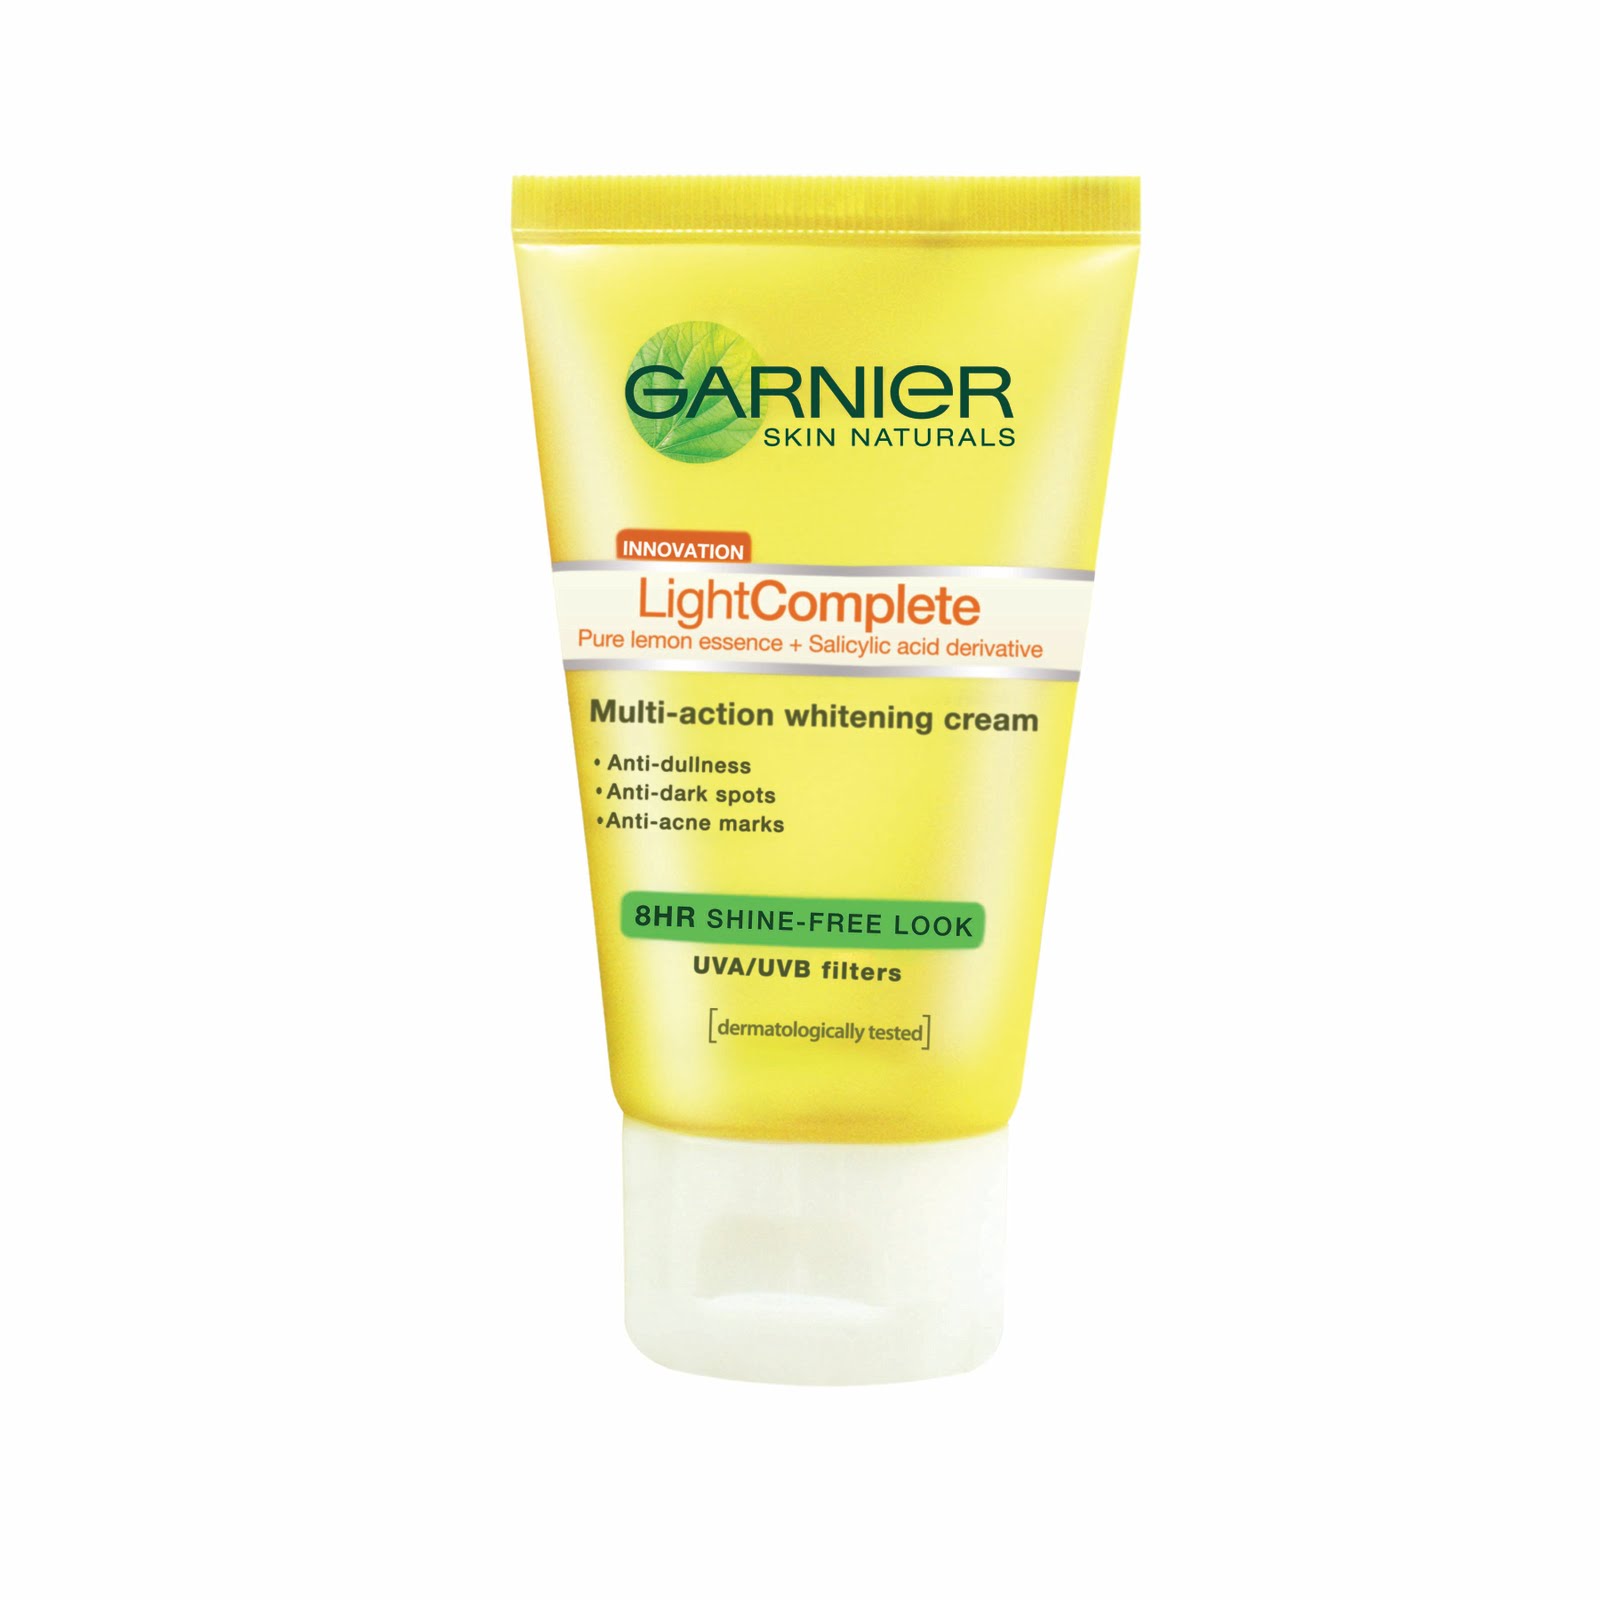  MBB Recommends: Garnier Light Complete (Multi-Action Whitening Cream